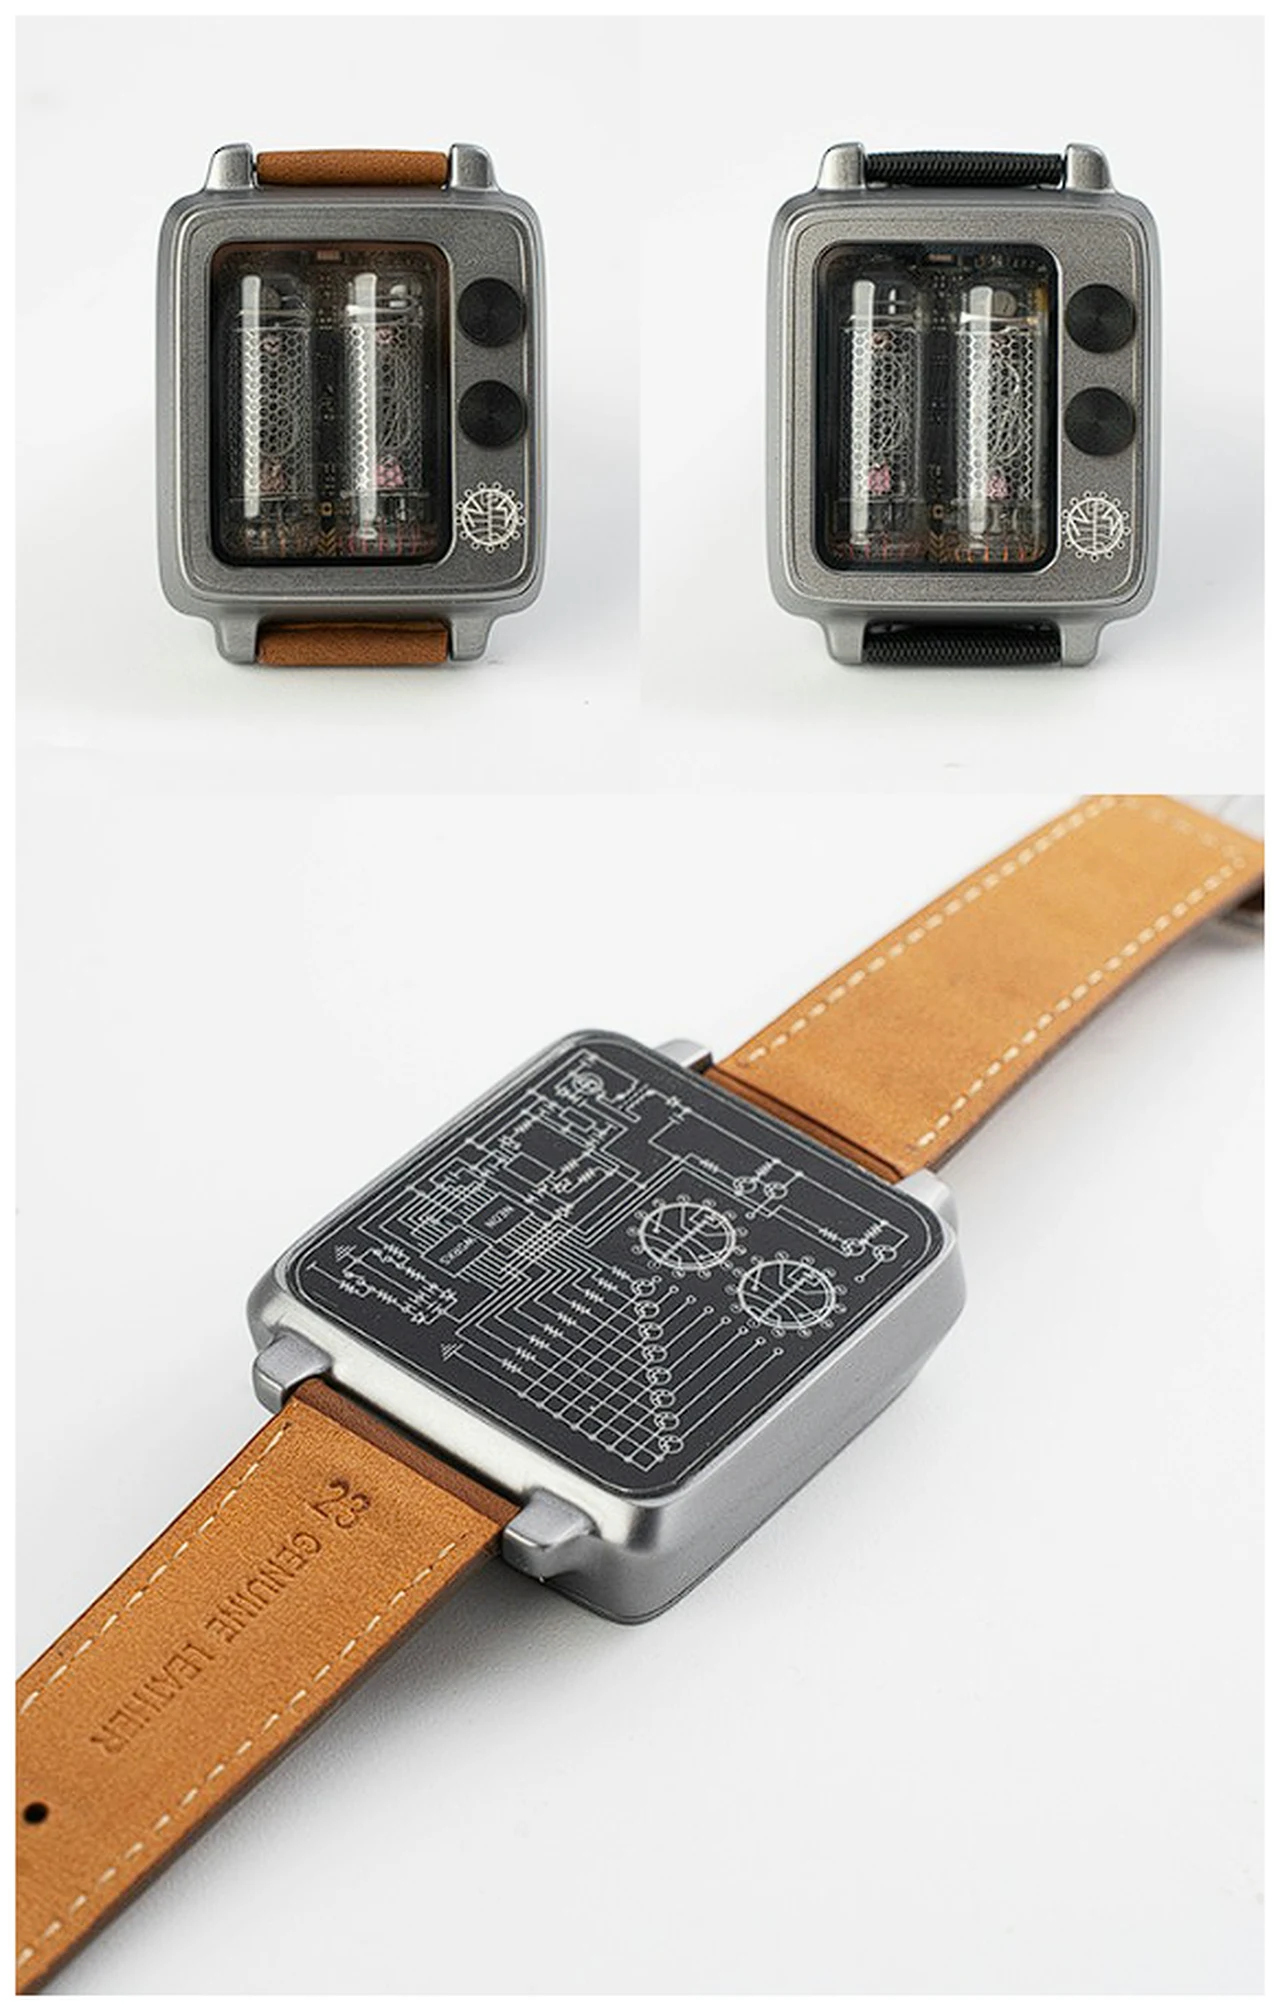 Nixie Tube wrist watch design